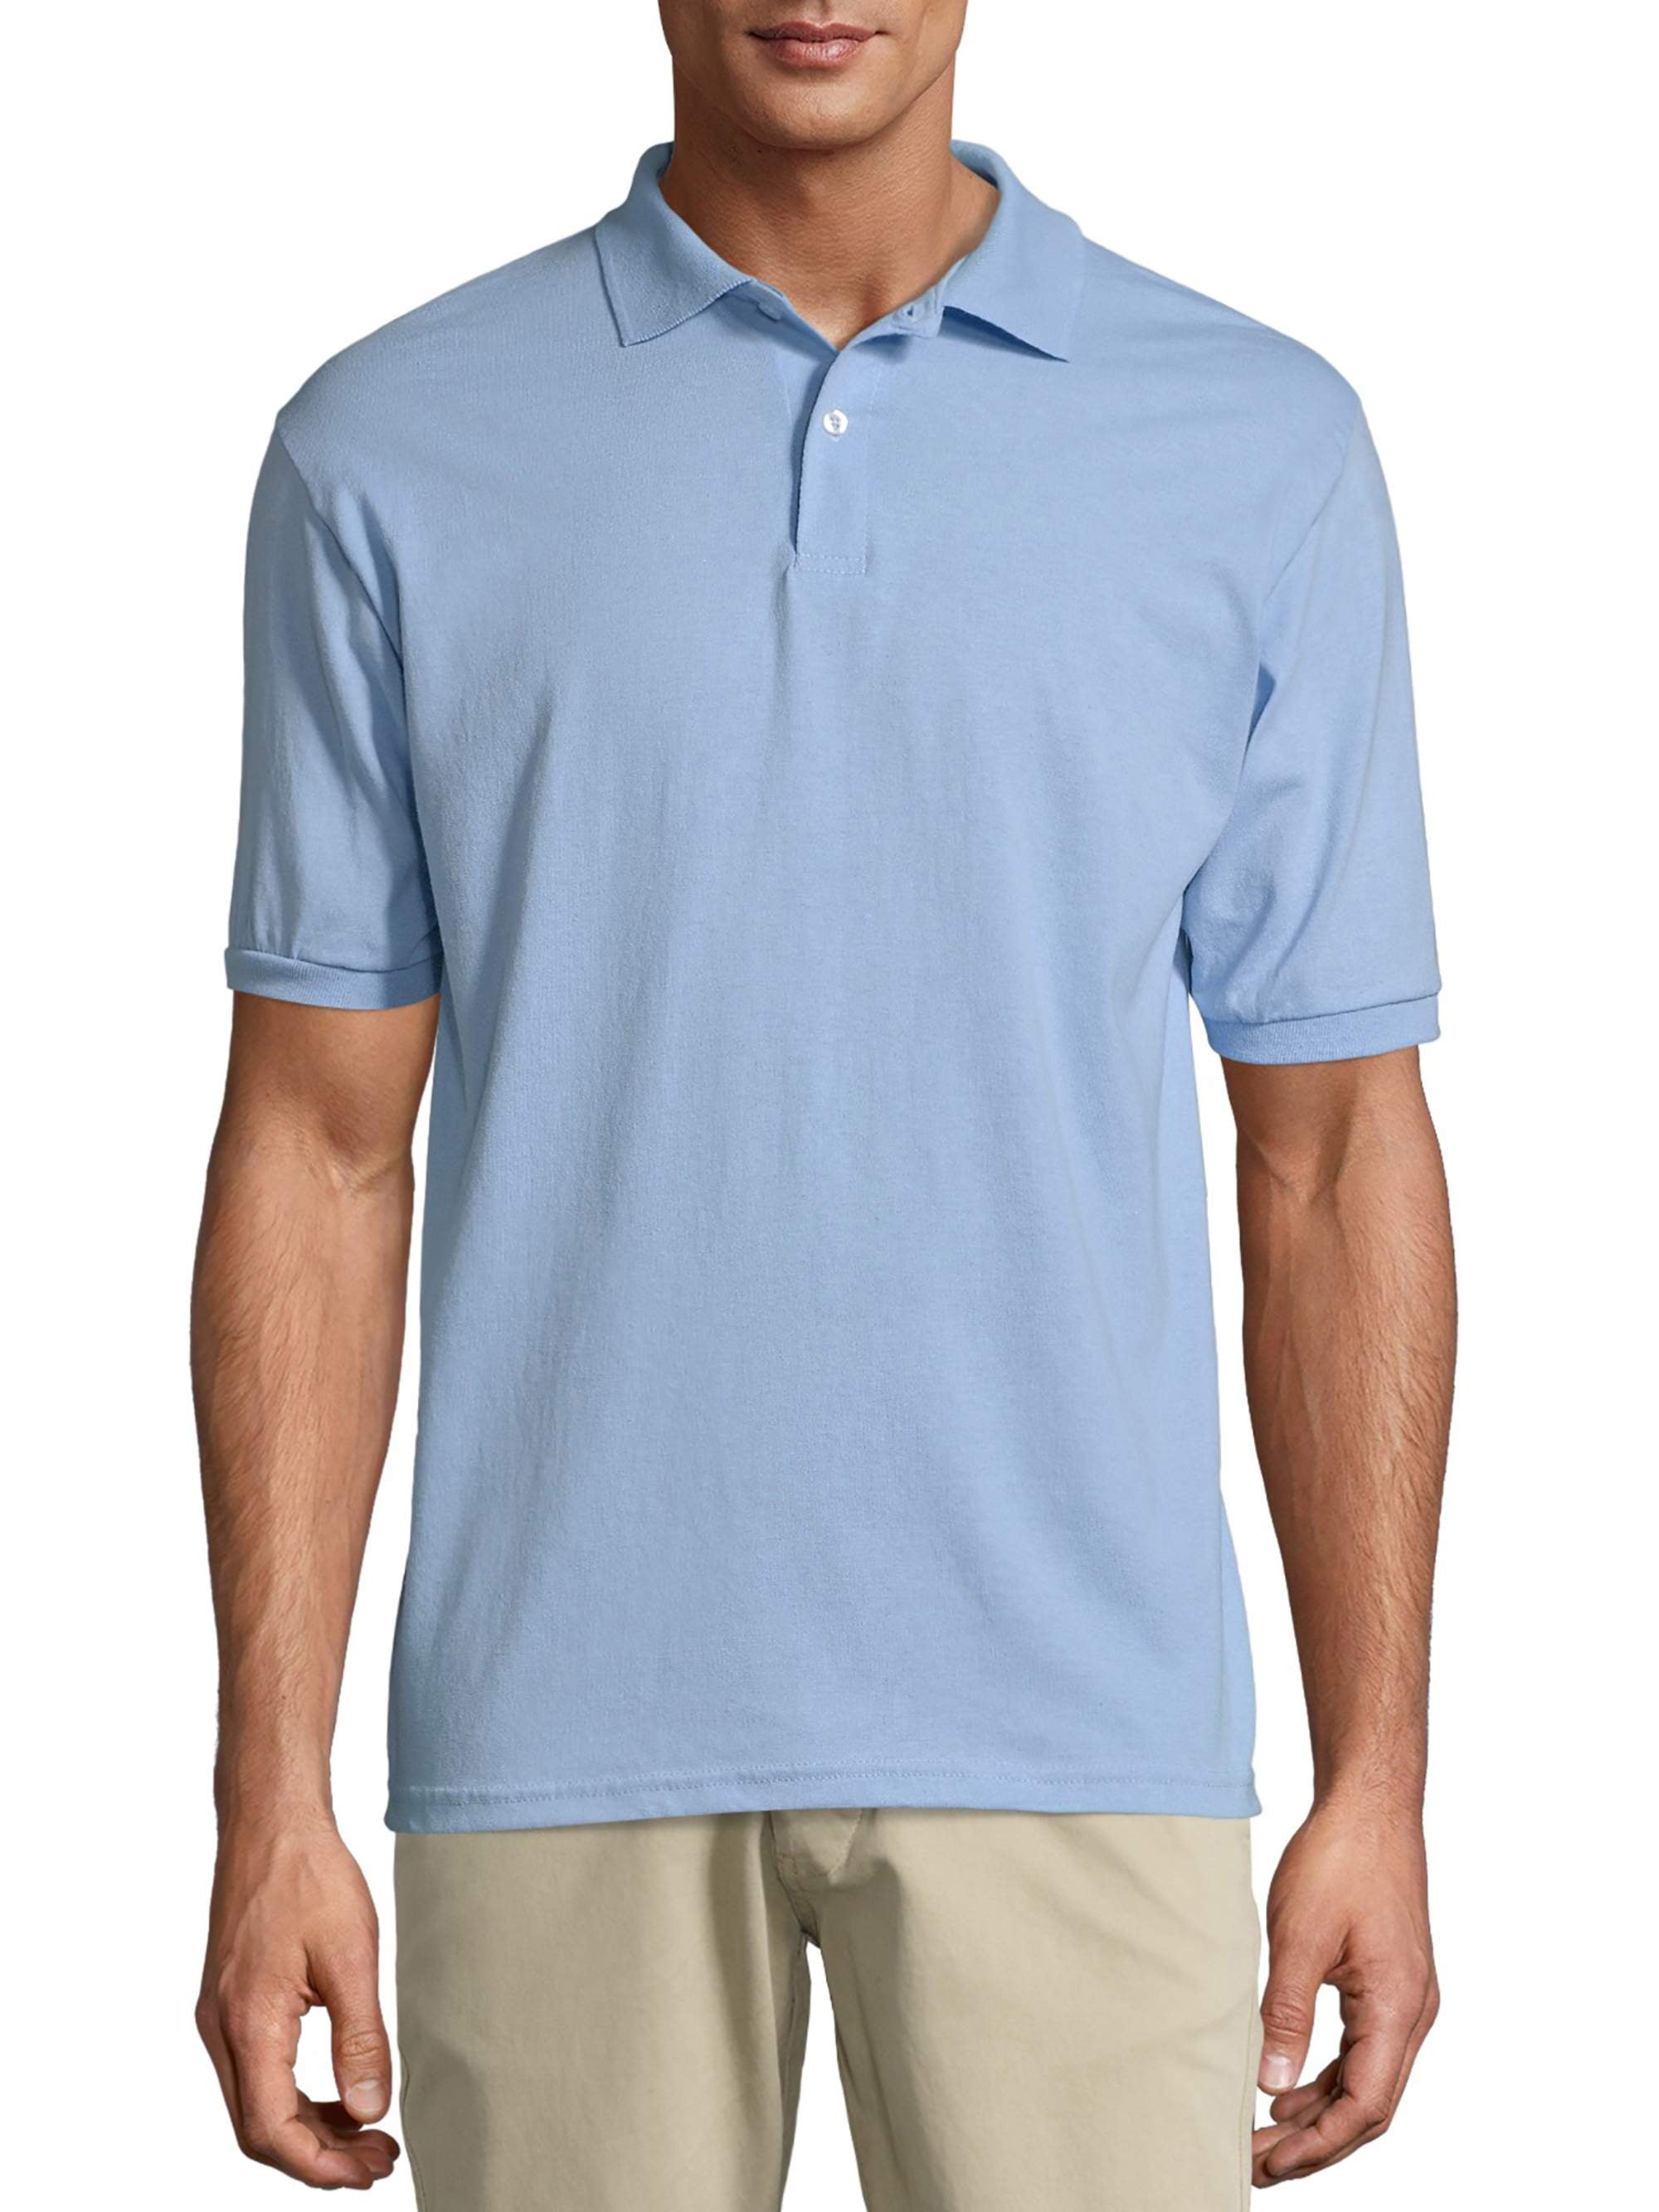 Hanes - Hanes Men's Ecosmart Jersey Polo Shirt - Walmart.com